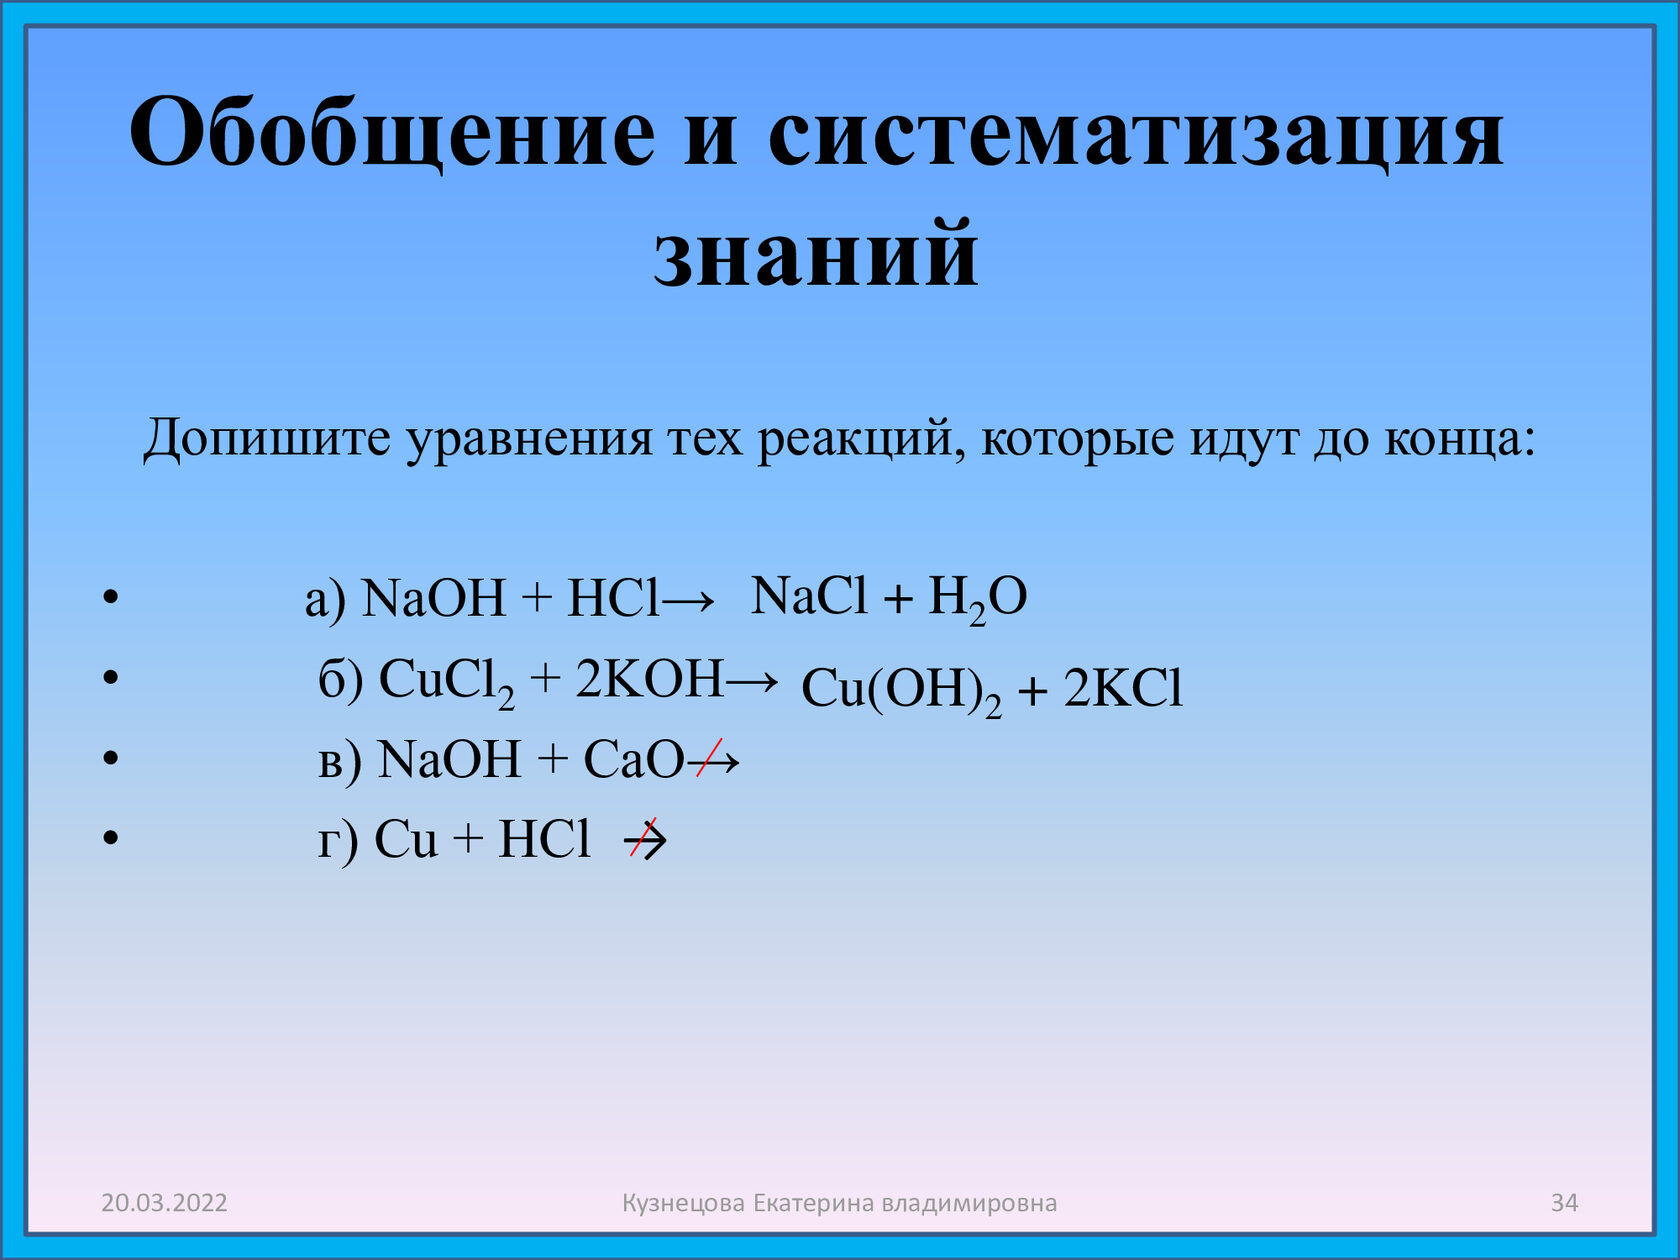 Naoh hcl название реакции. HCL уравнение реакции. Допишите уравнения реакций ,идущих до конца. Реакция 2. допишите уравнения реакций:. Реакции которые идут.